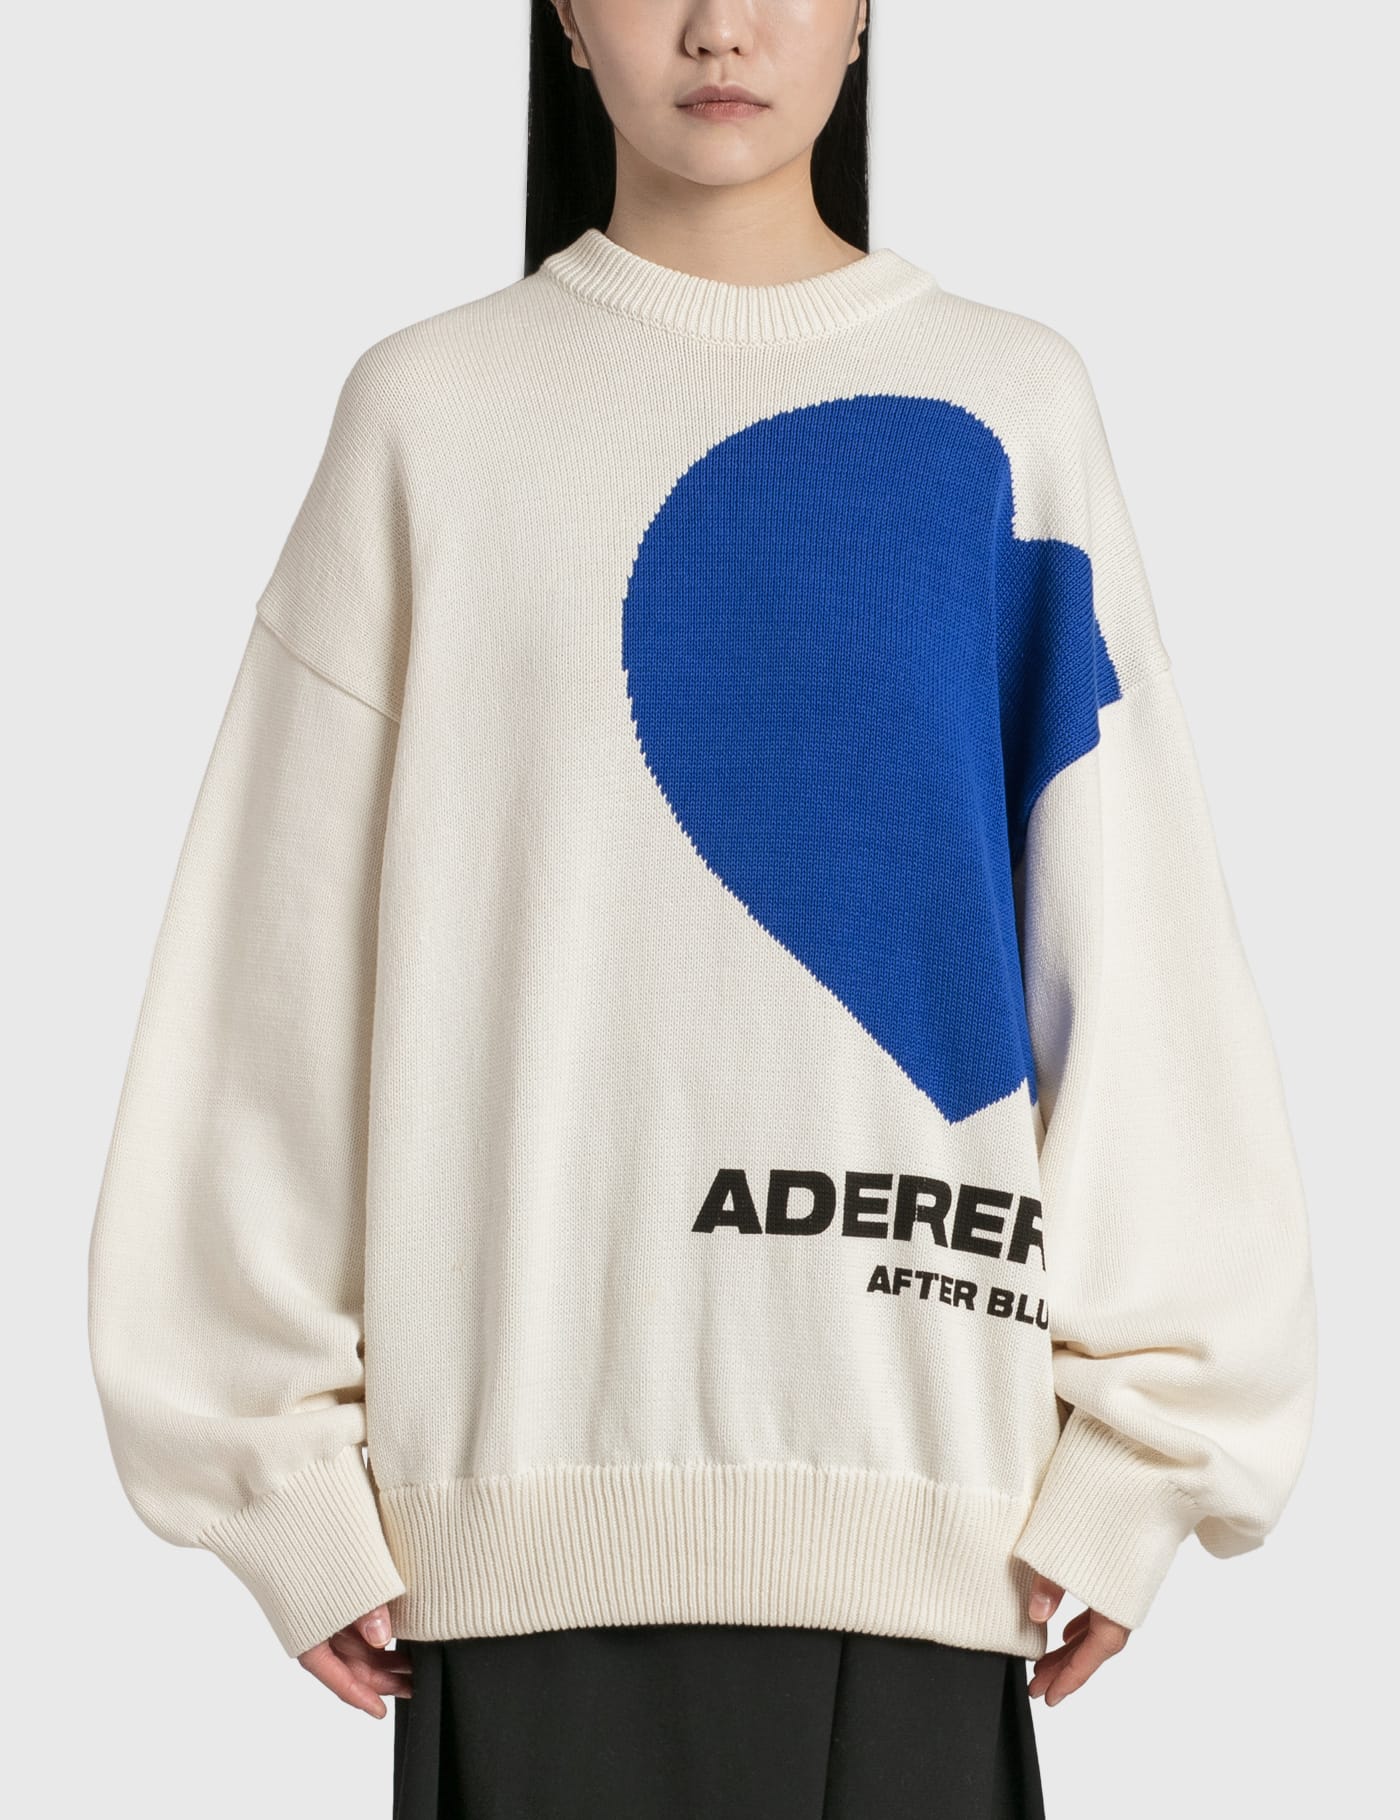 Ader Error - Ader Logo Sweatshirt | HBX - Globally Curated Fashion 